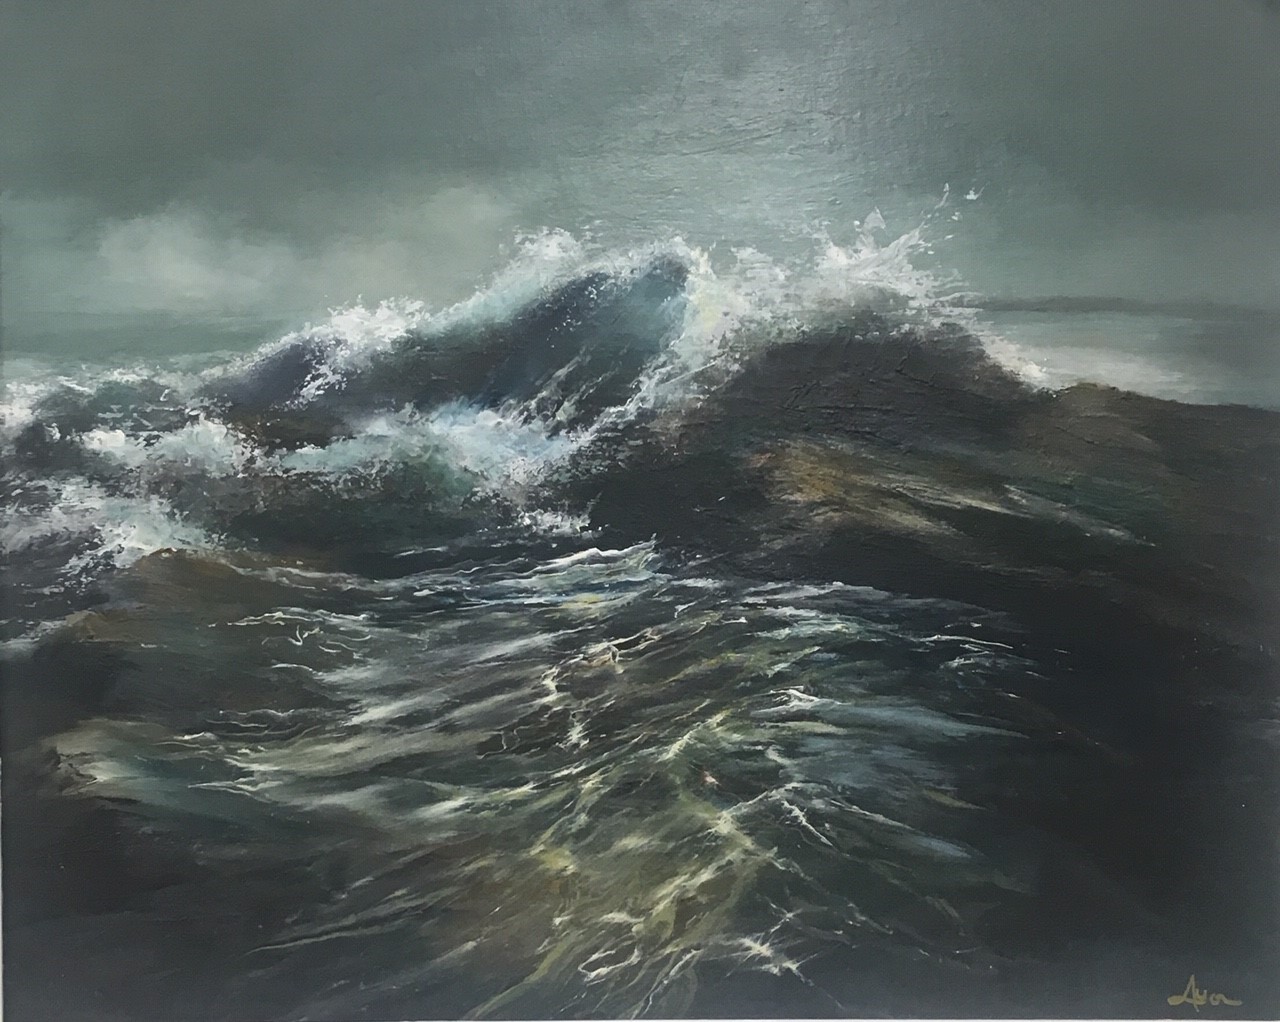 'Storm Wave, Ballast Banks, Troon' by artist Alison Lyon